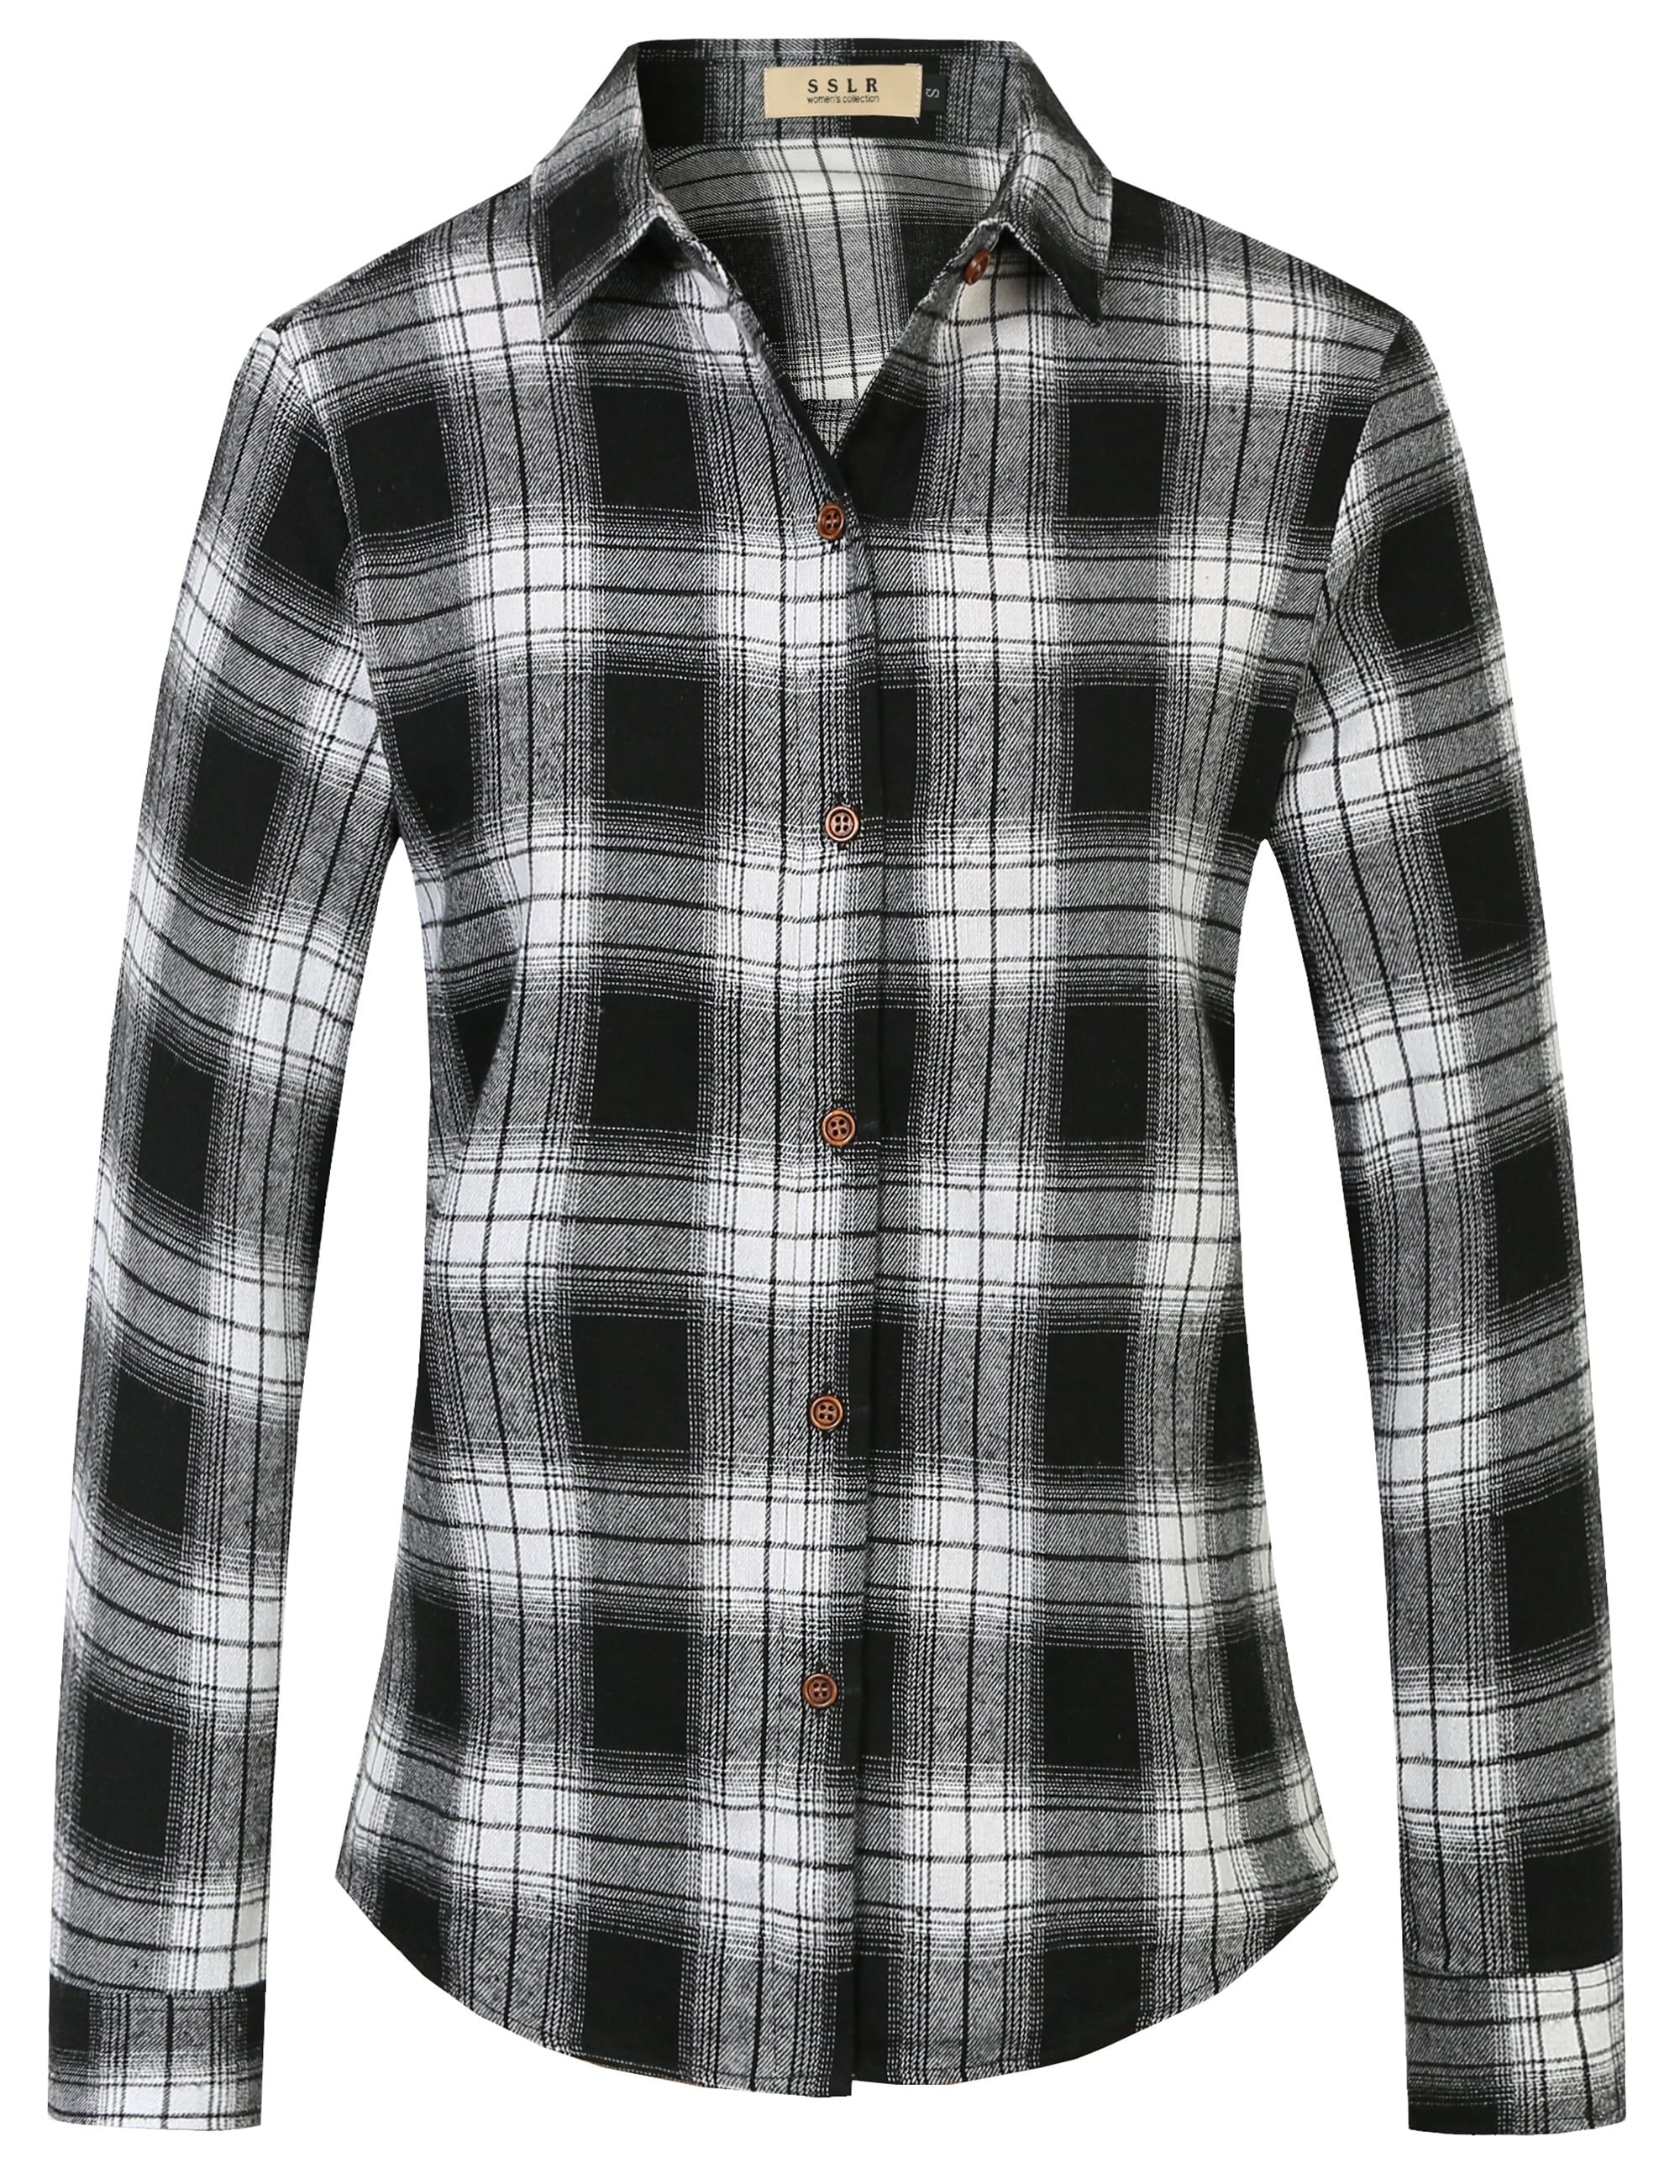 SSLR Flannel Shirts for Women Long Sleeve Button Down Shirts Plaid Lightweight Casual | Walmart (US)